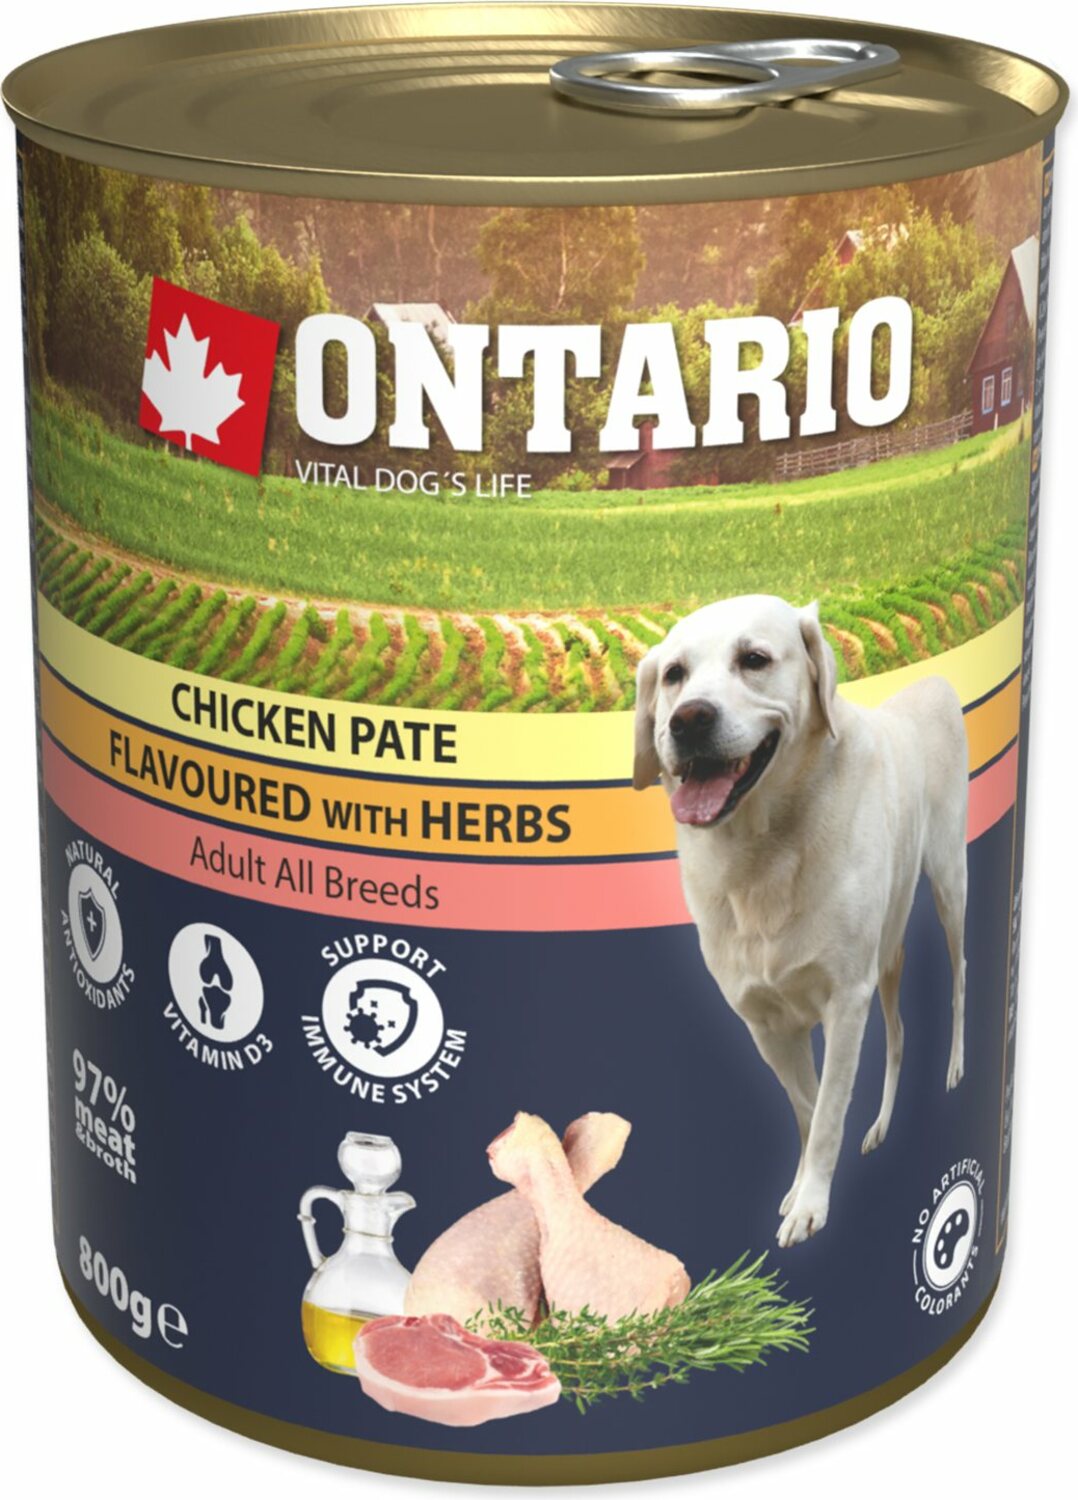 Konzerva Ontario kuře s bylinkami, paté 800g